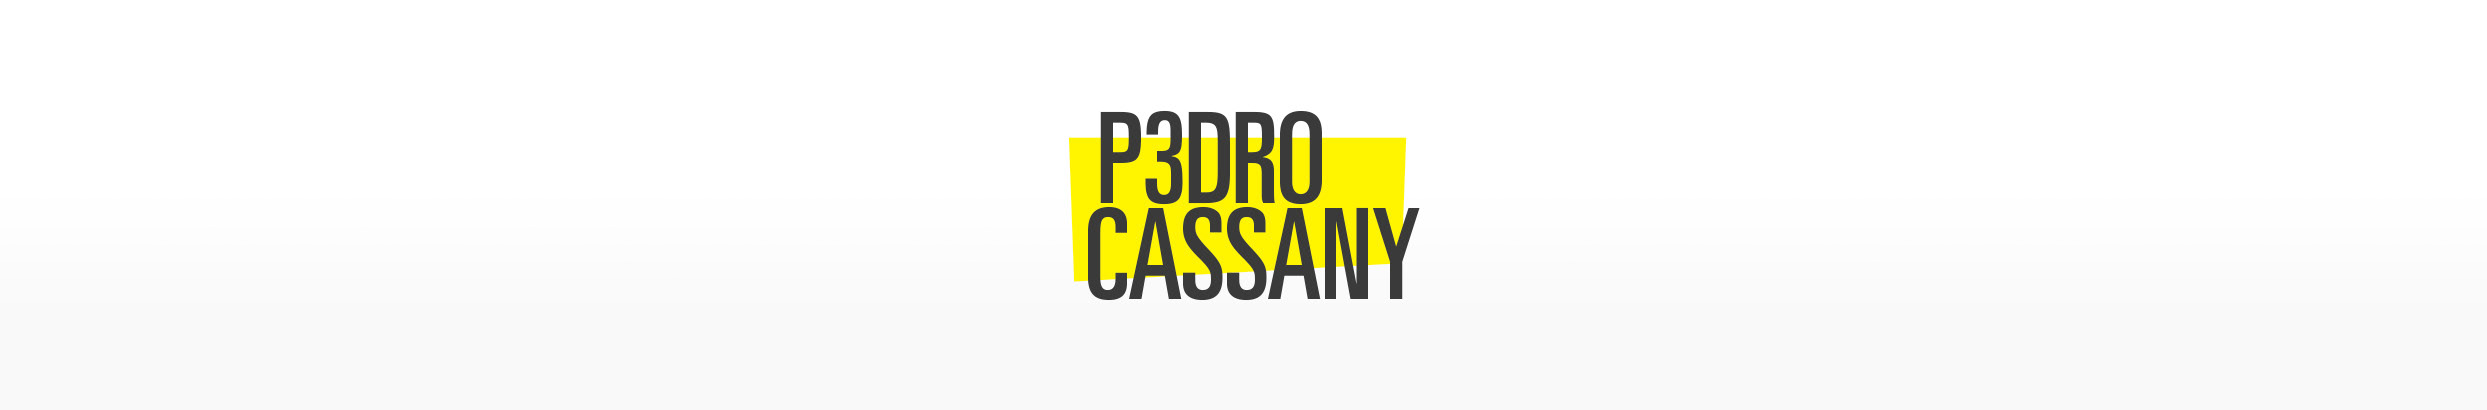 Pedro Cassanys profilbanner